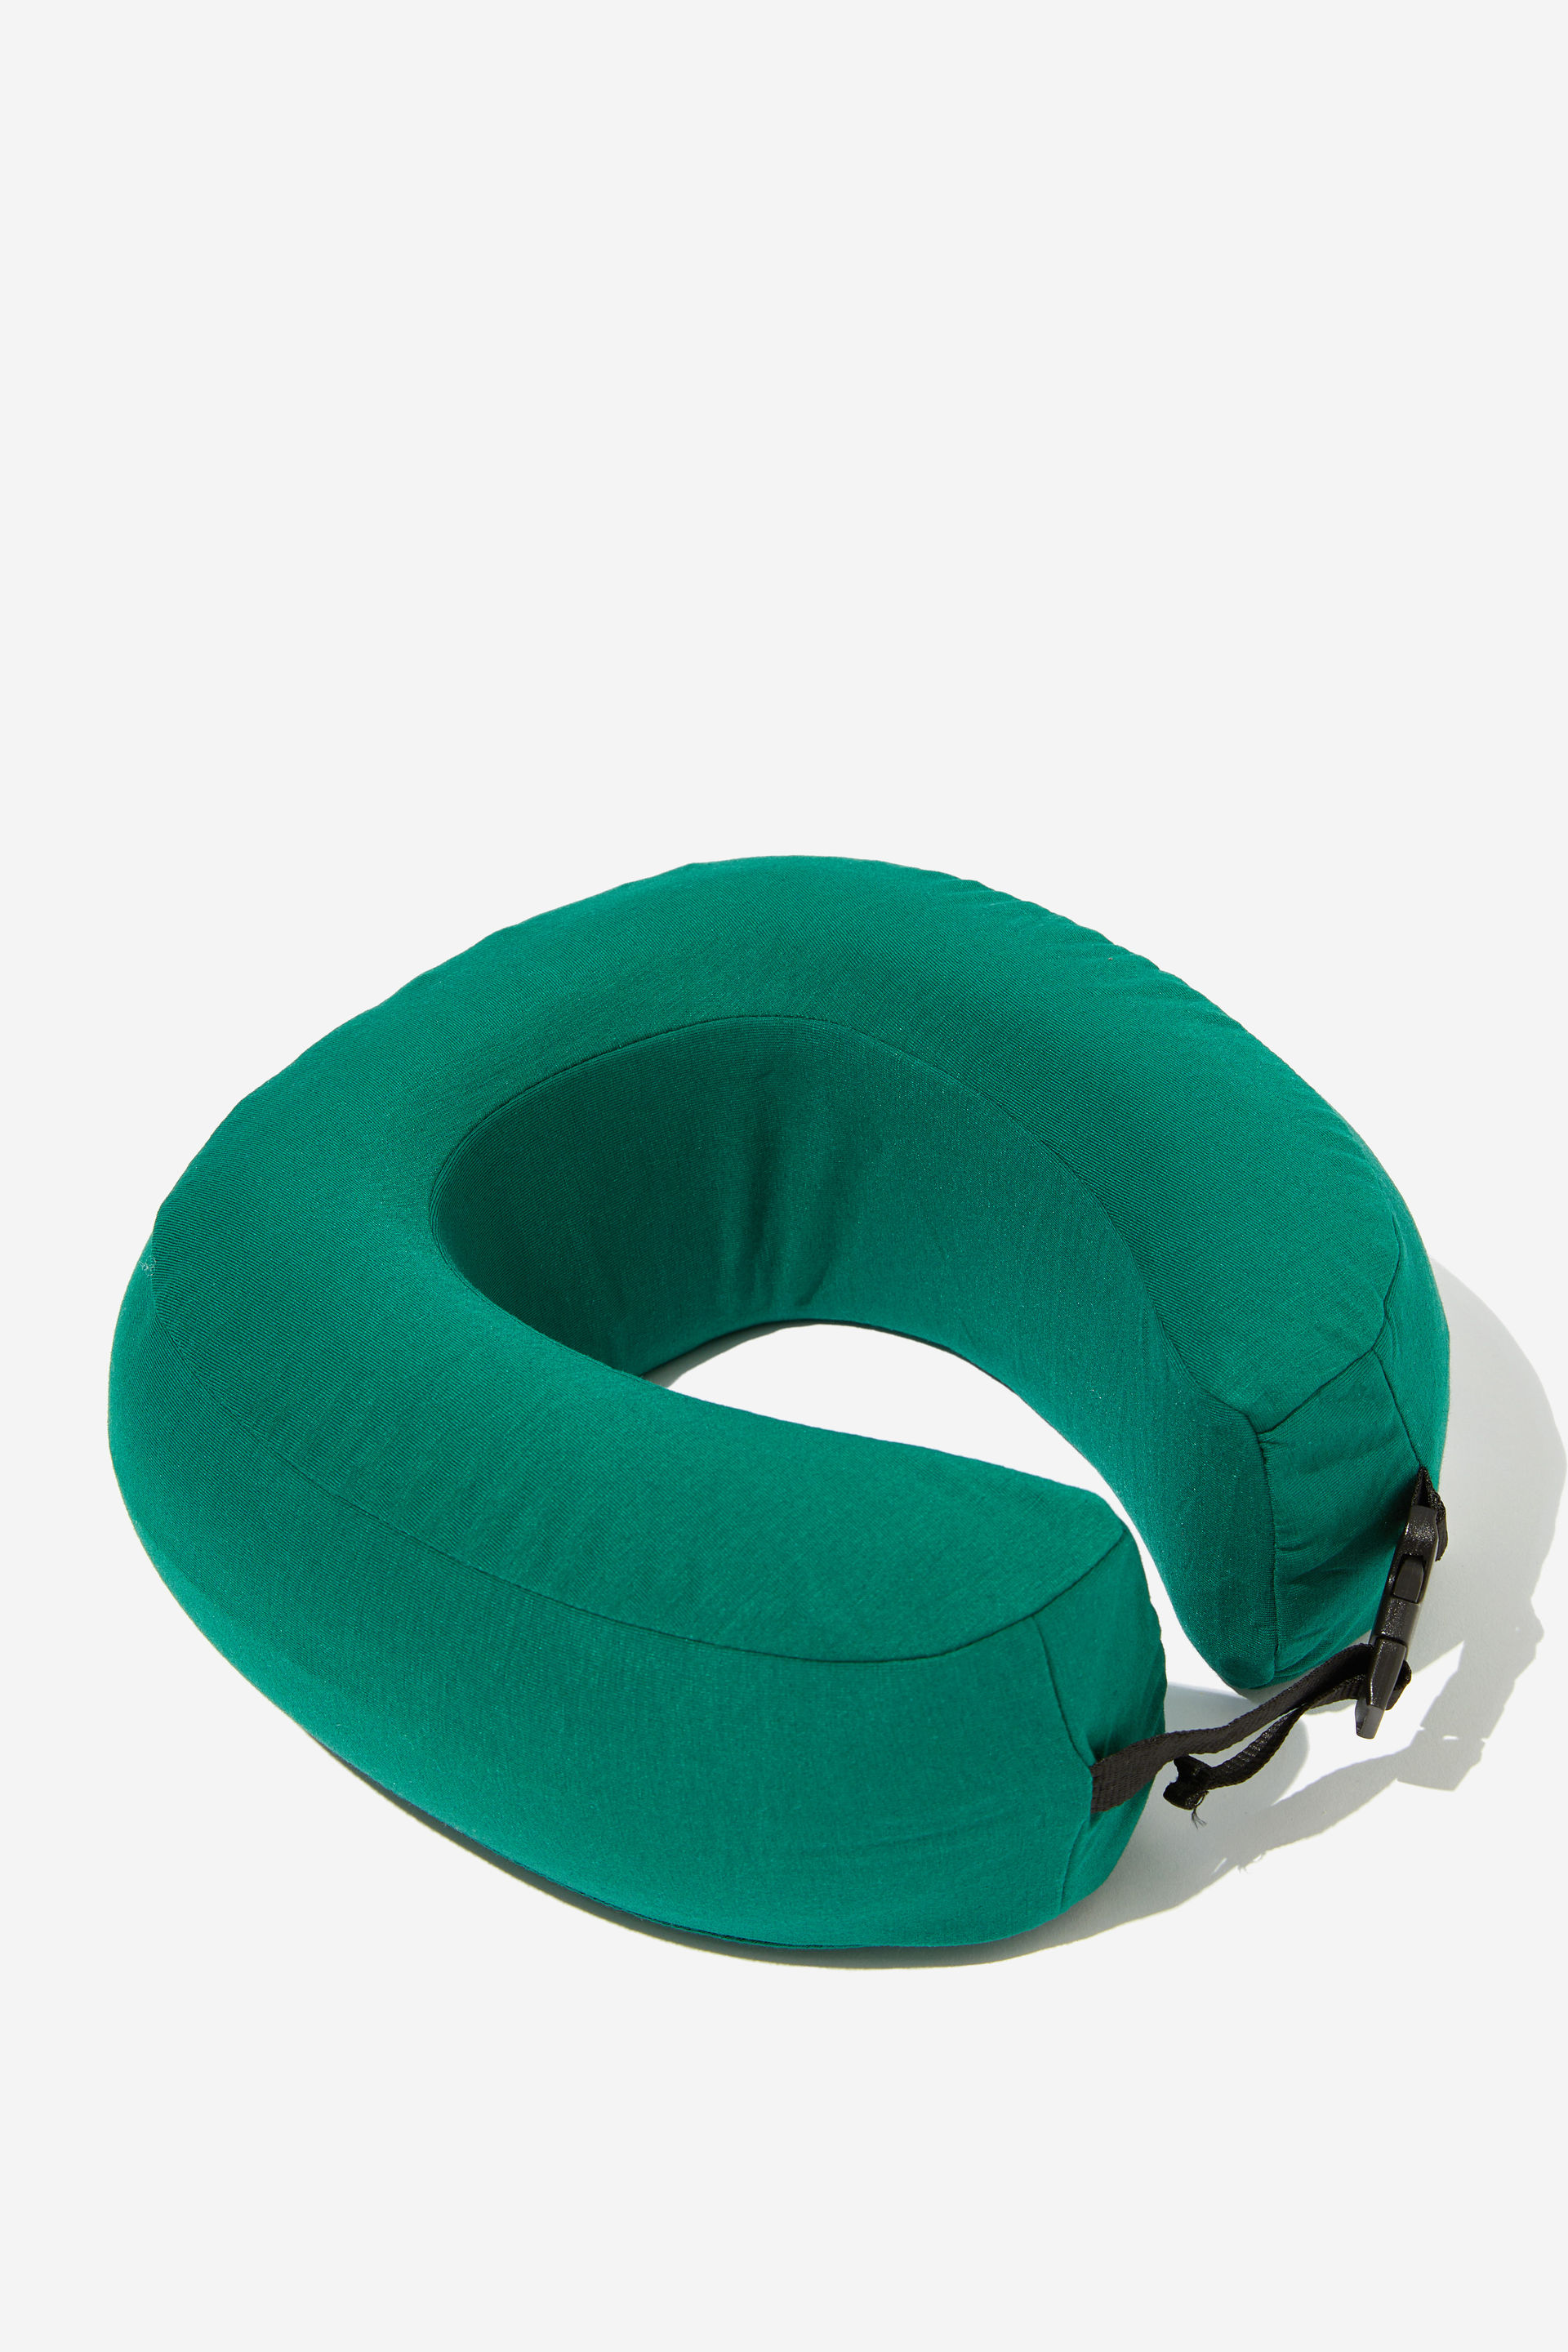 Typo - Foldable Travel Neck Pillow - Heritage green